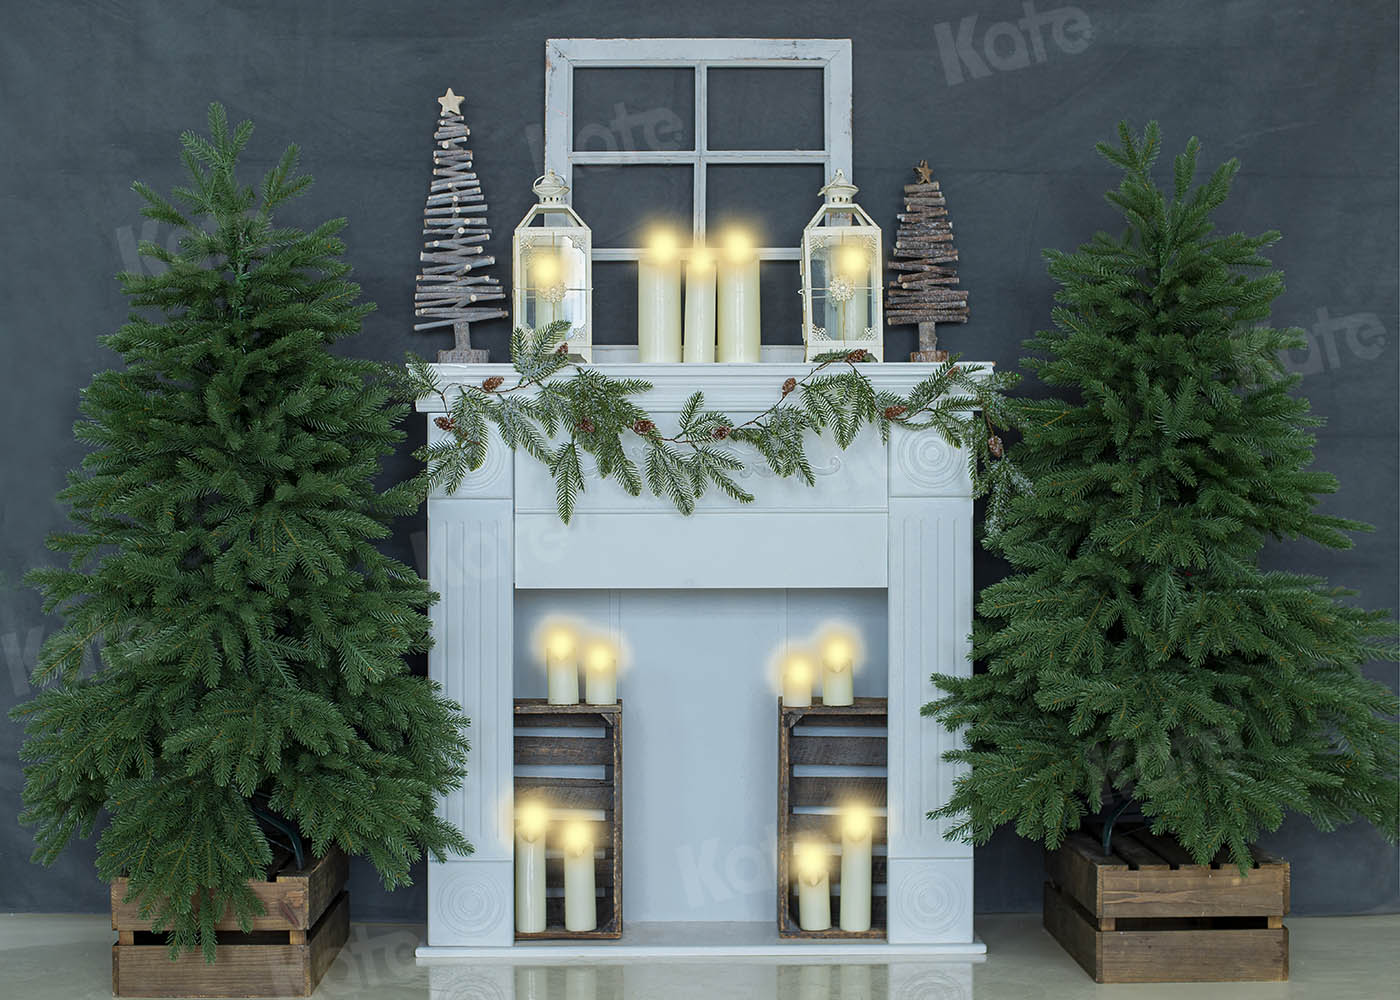 Kate Fireplace Candlelight Christmas Backdrop Designed by Emetselch